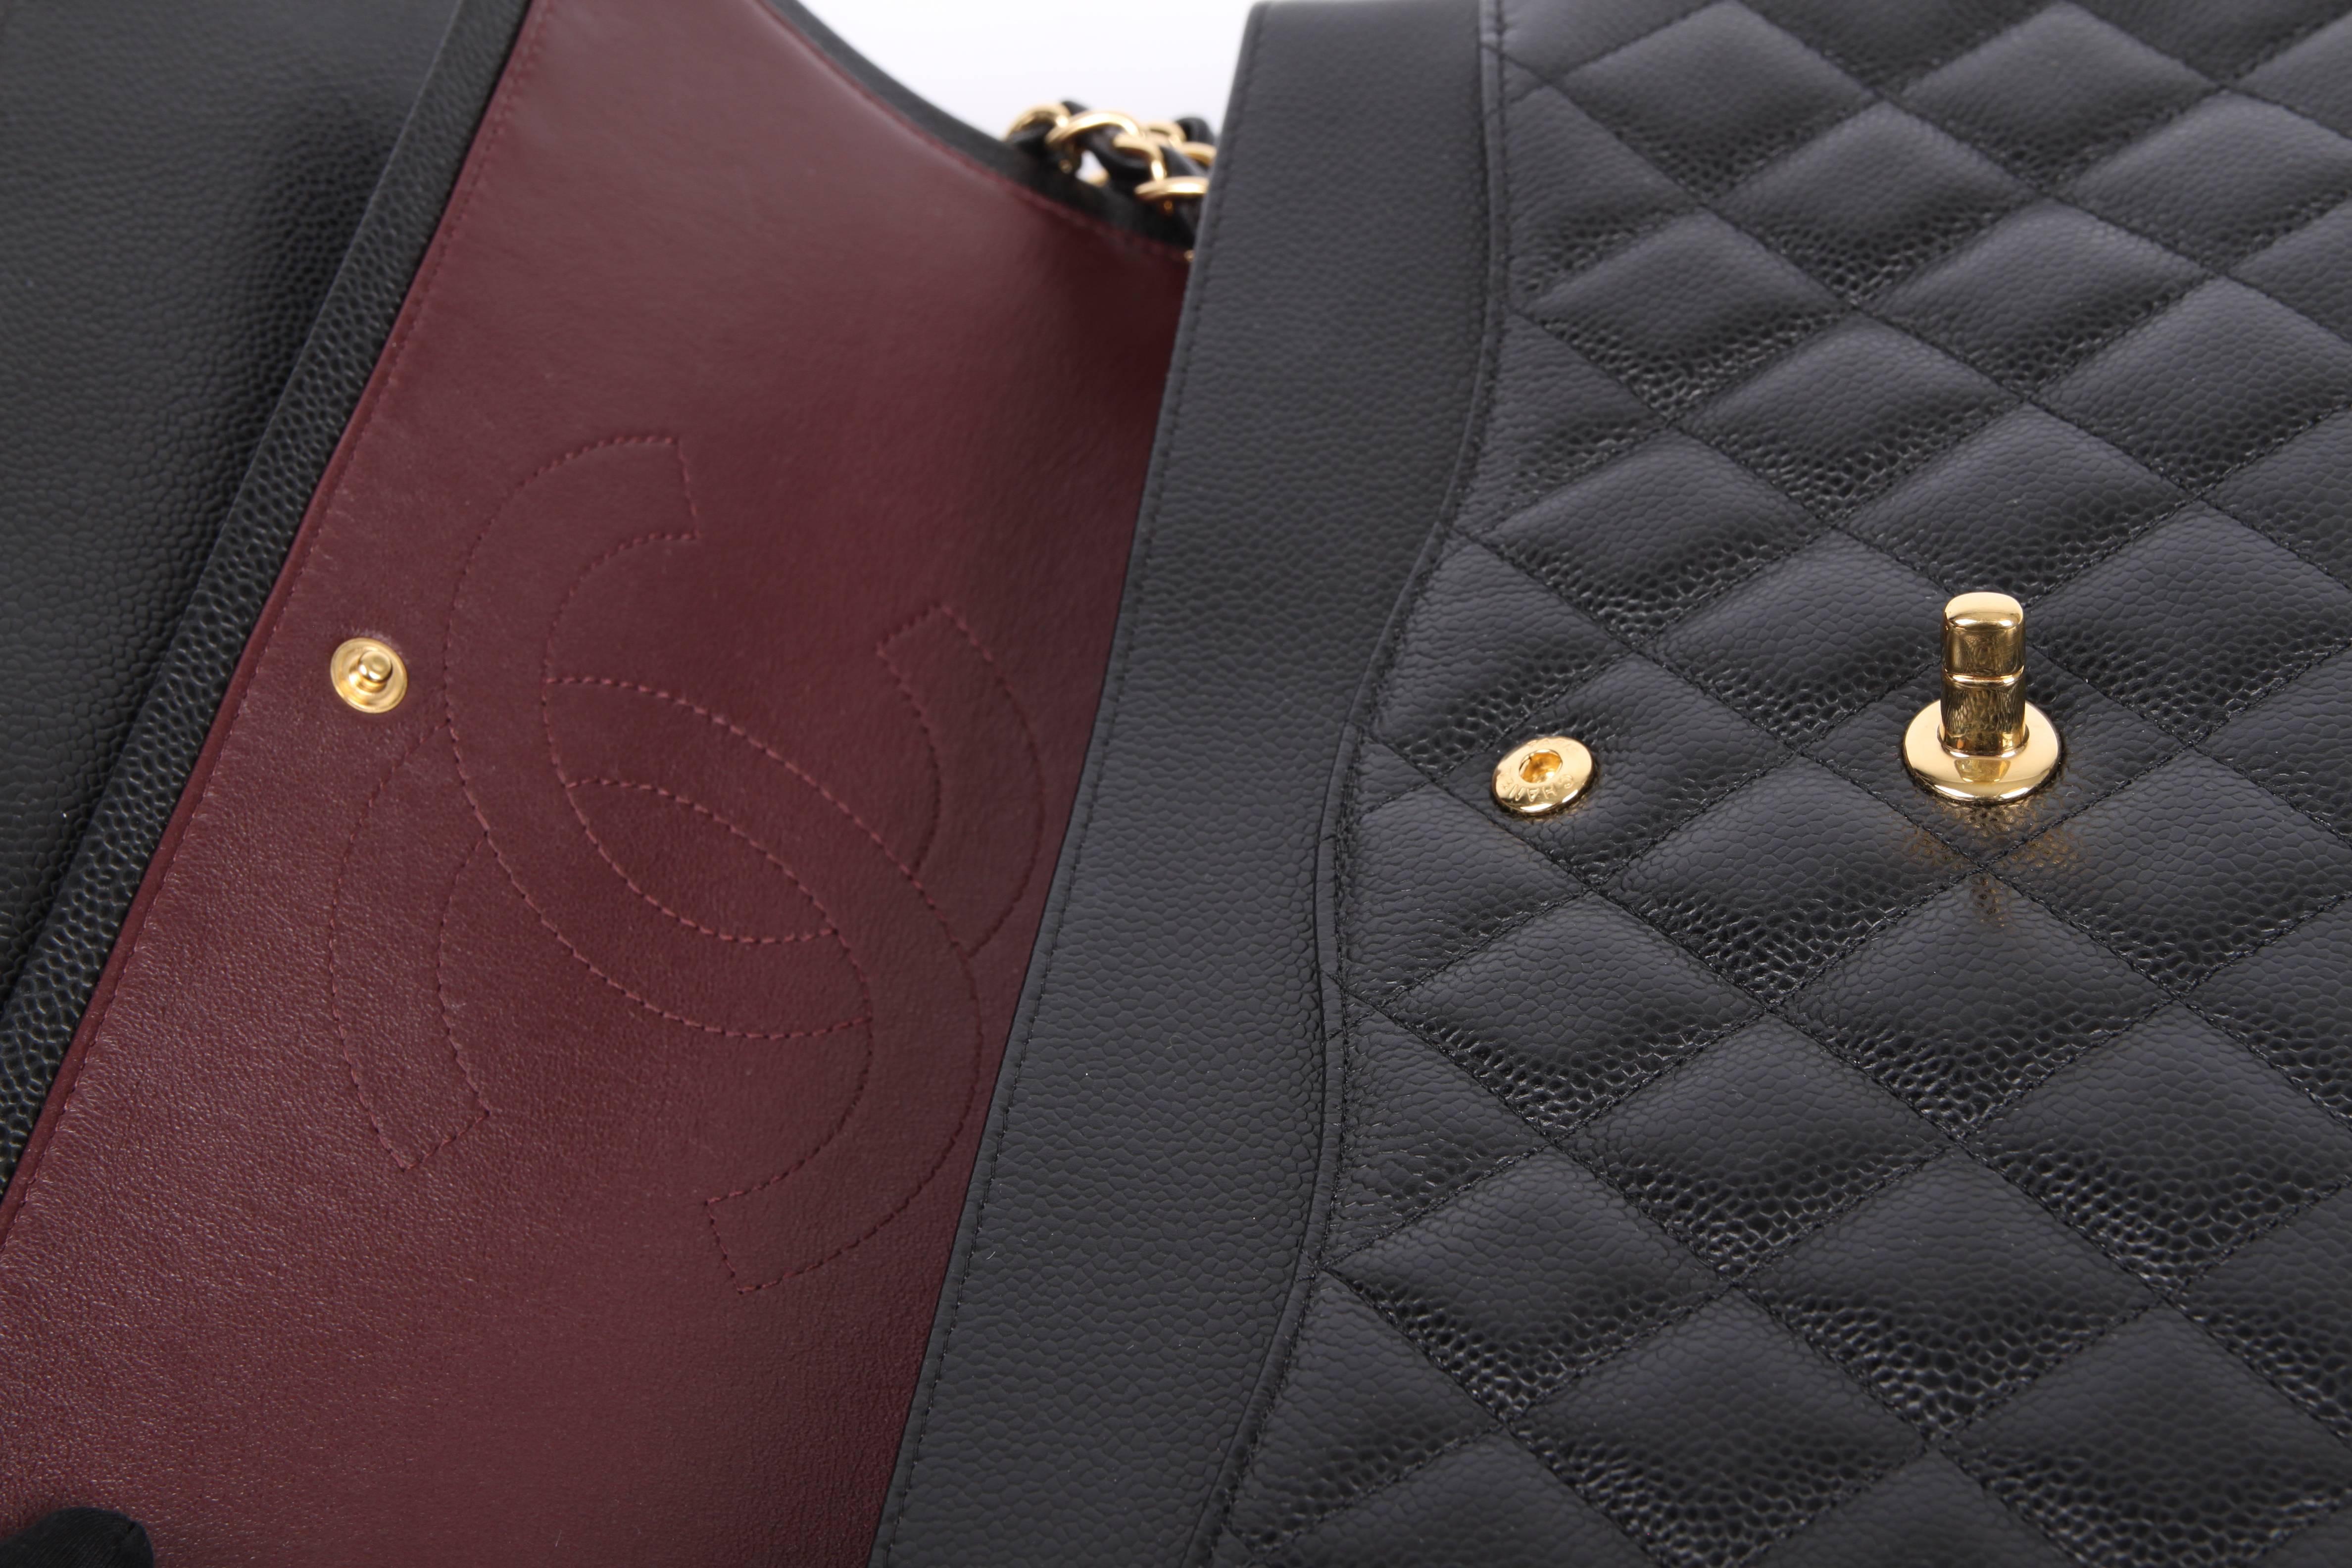       Chanel 2.55 Timeless Jumbo Double Flap Bag - black caviar leather/gold Cha 2